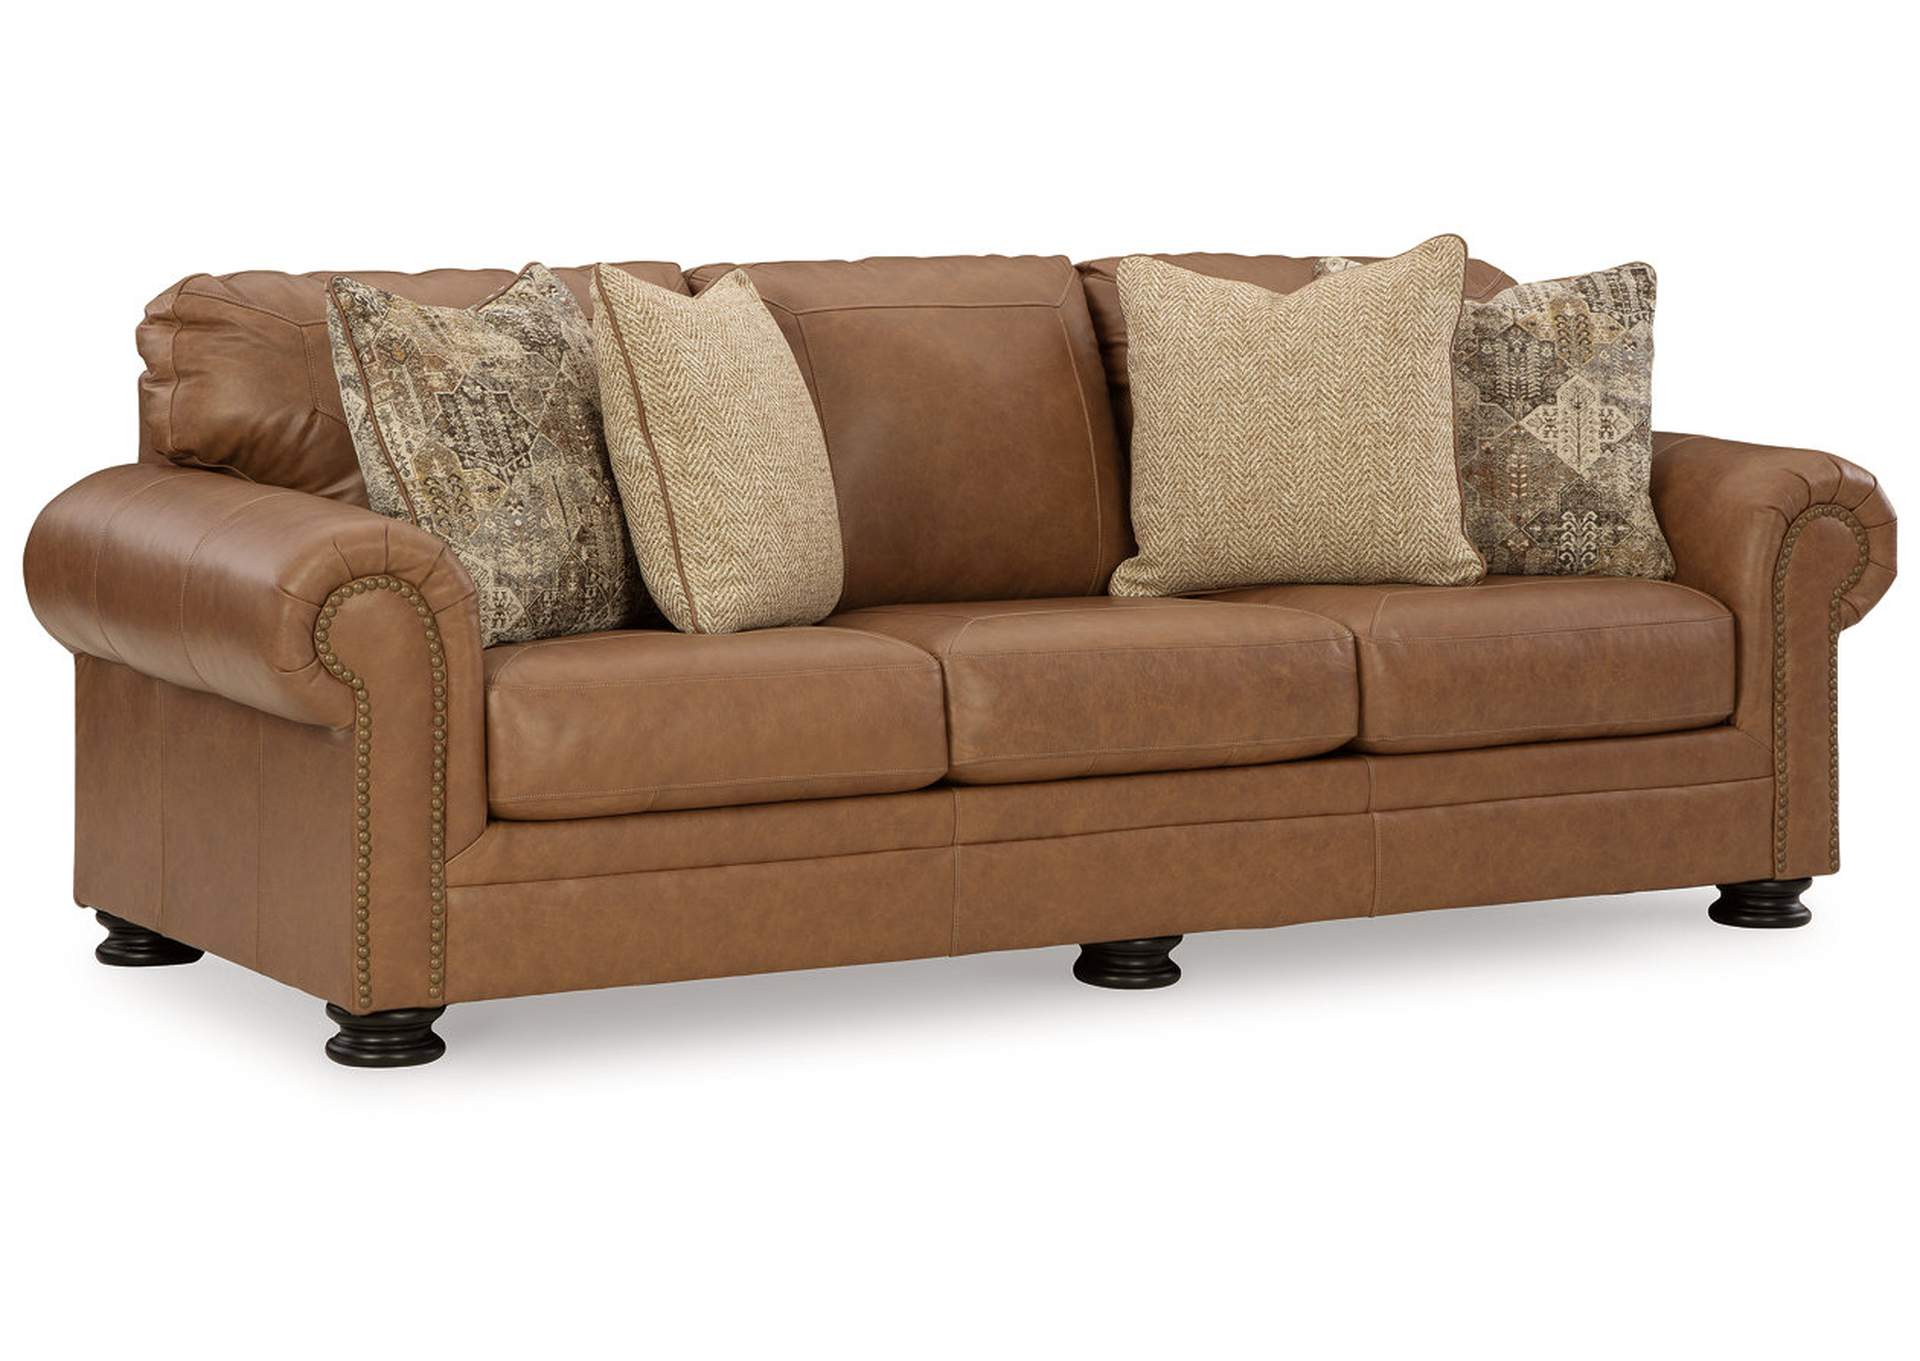 Ashley brown leather sofa